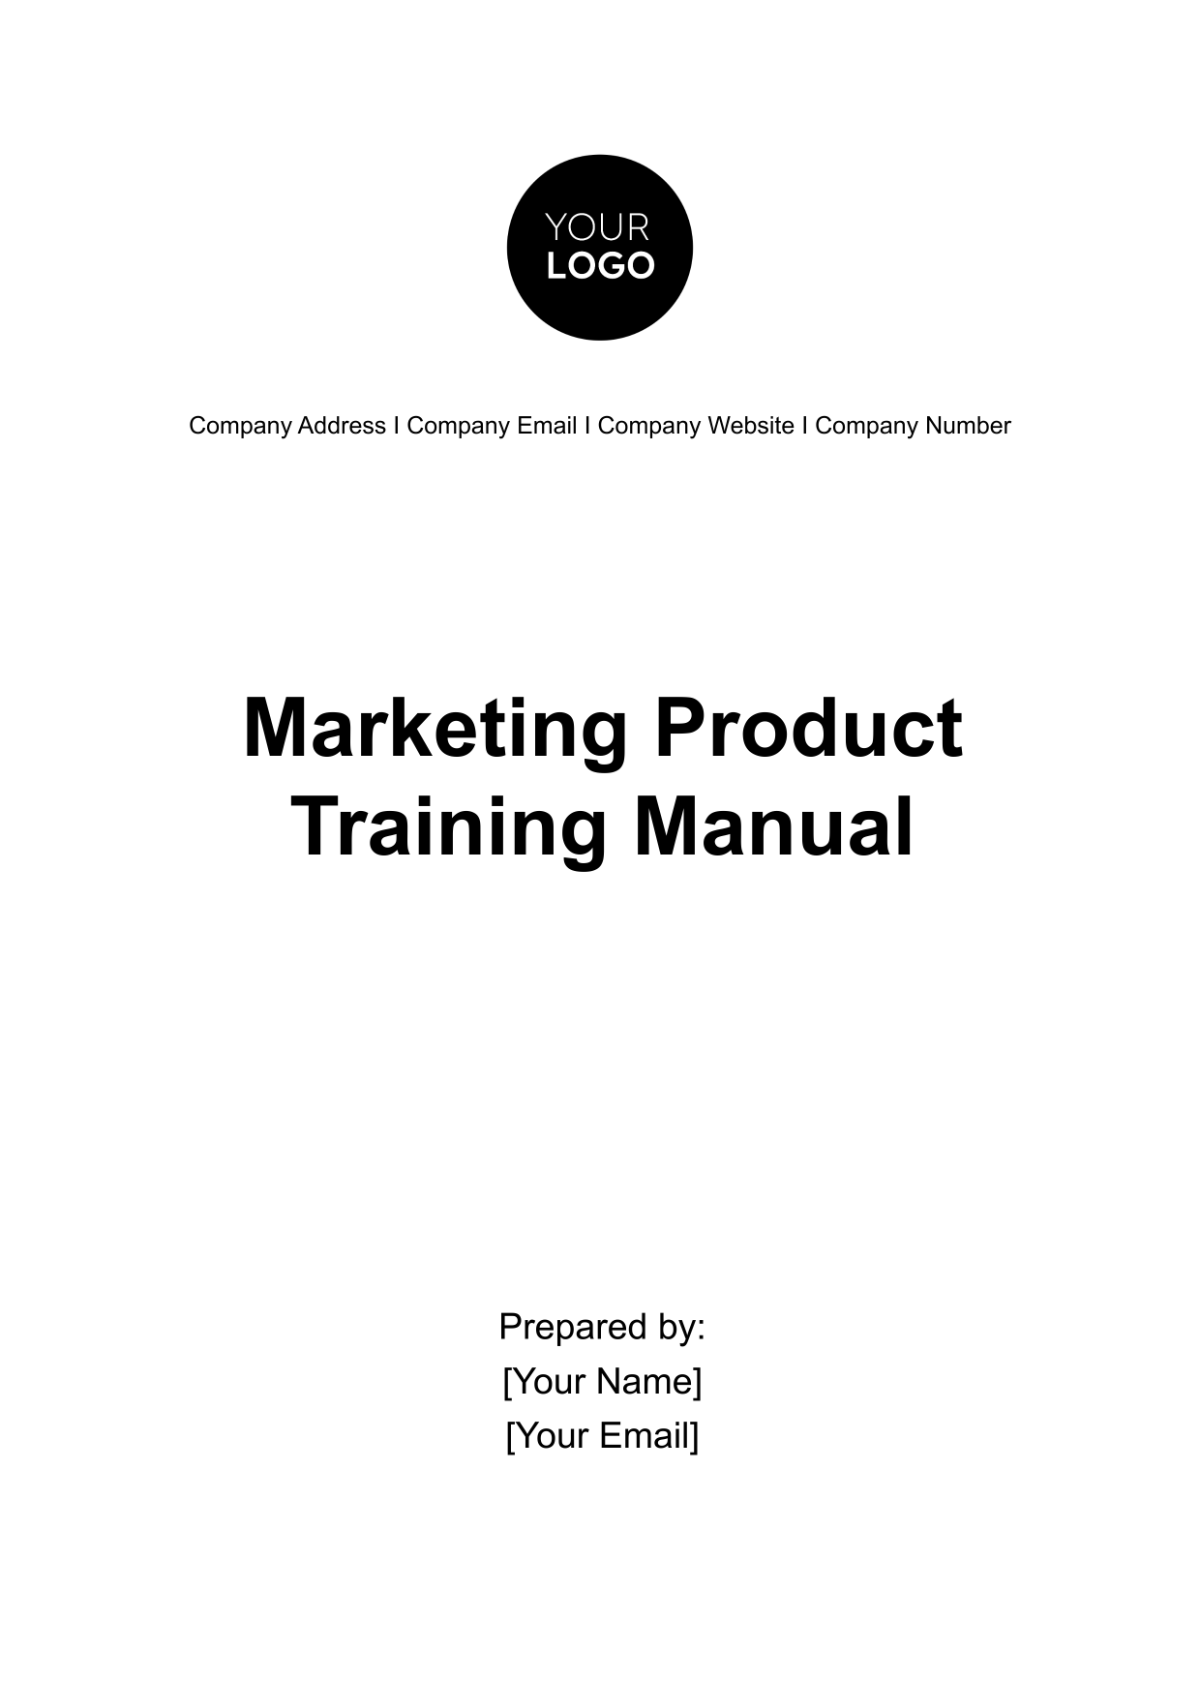 Free Marketing Product Training Manual Template